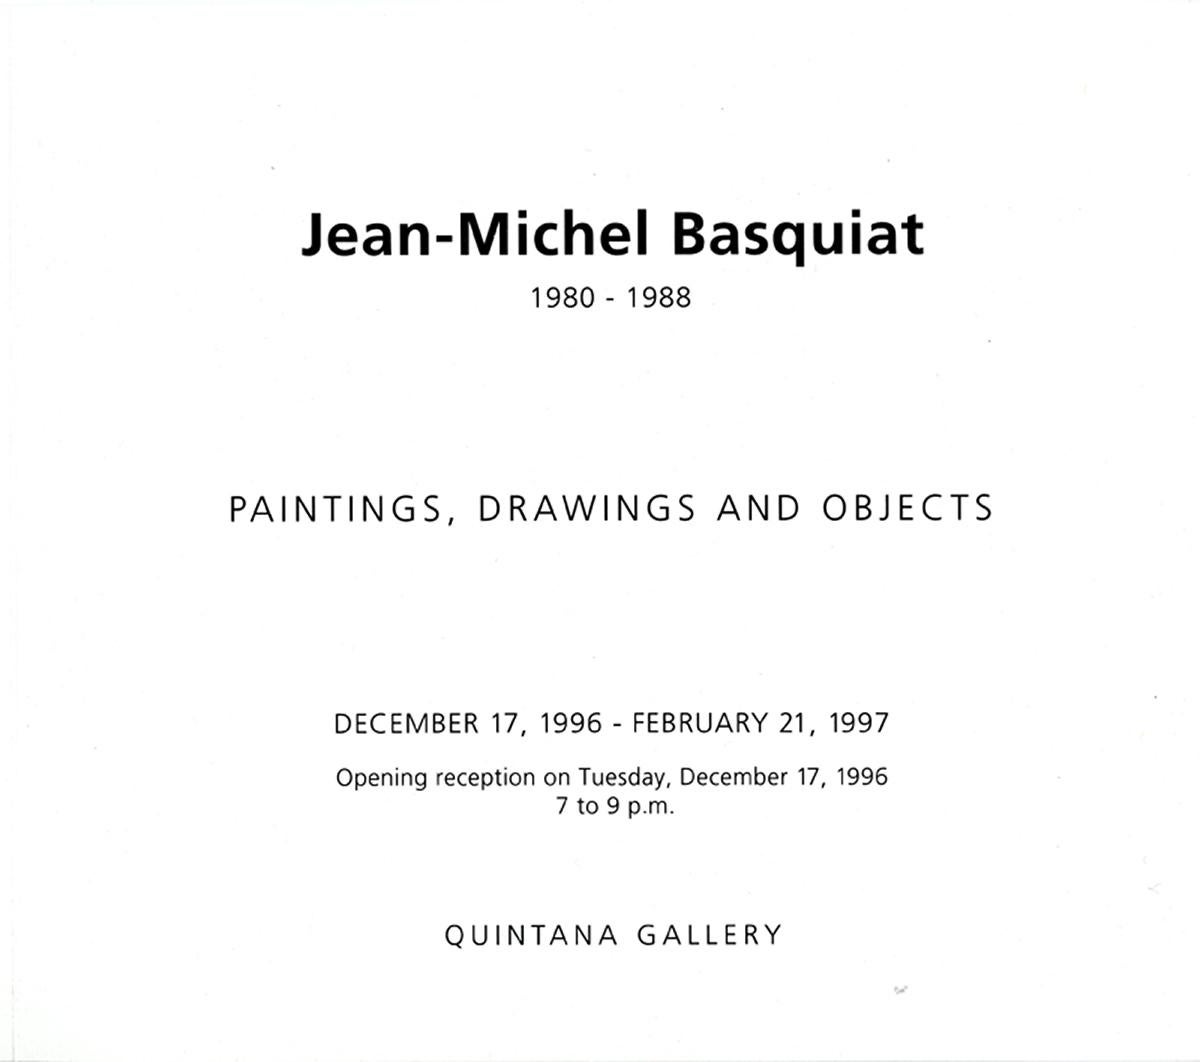 Jean-Michel Basquiat Quintana Gallery 1997 (announcement card) - Print by (after) Jean-Michel Basquiat